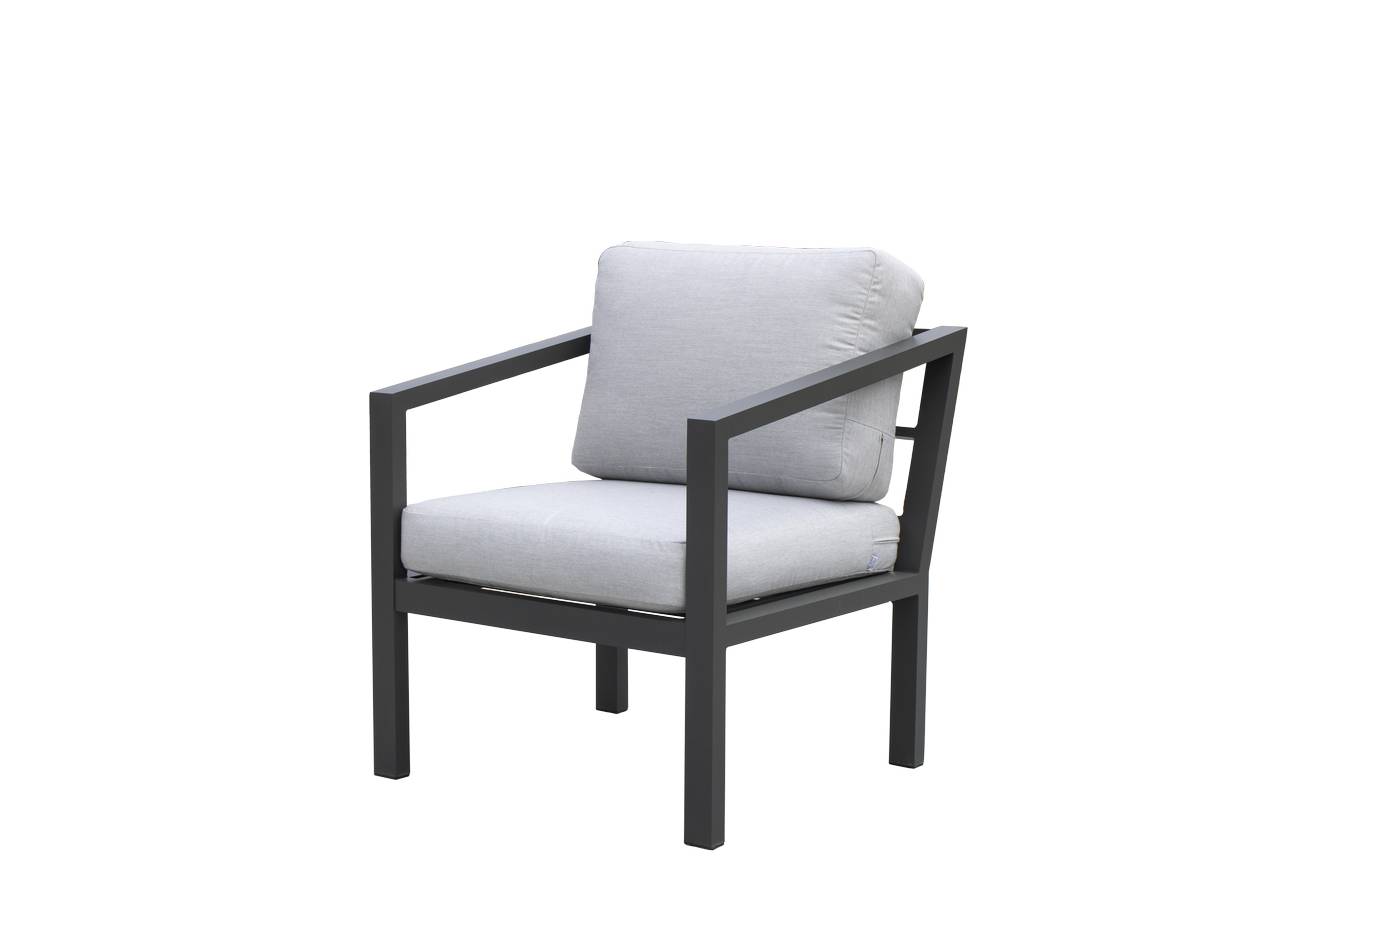 Set Aluminio Oregón-8 - Conjunto de aluminio: sofá de 3 plazas + 2 sillones + 1 mesa de centro. Colores blanco, antracita, marrón, champagne o plata.